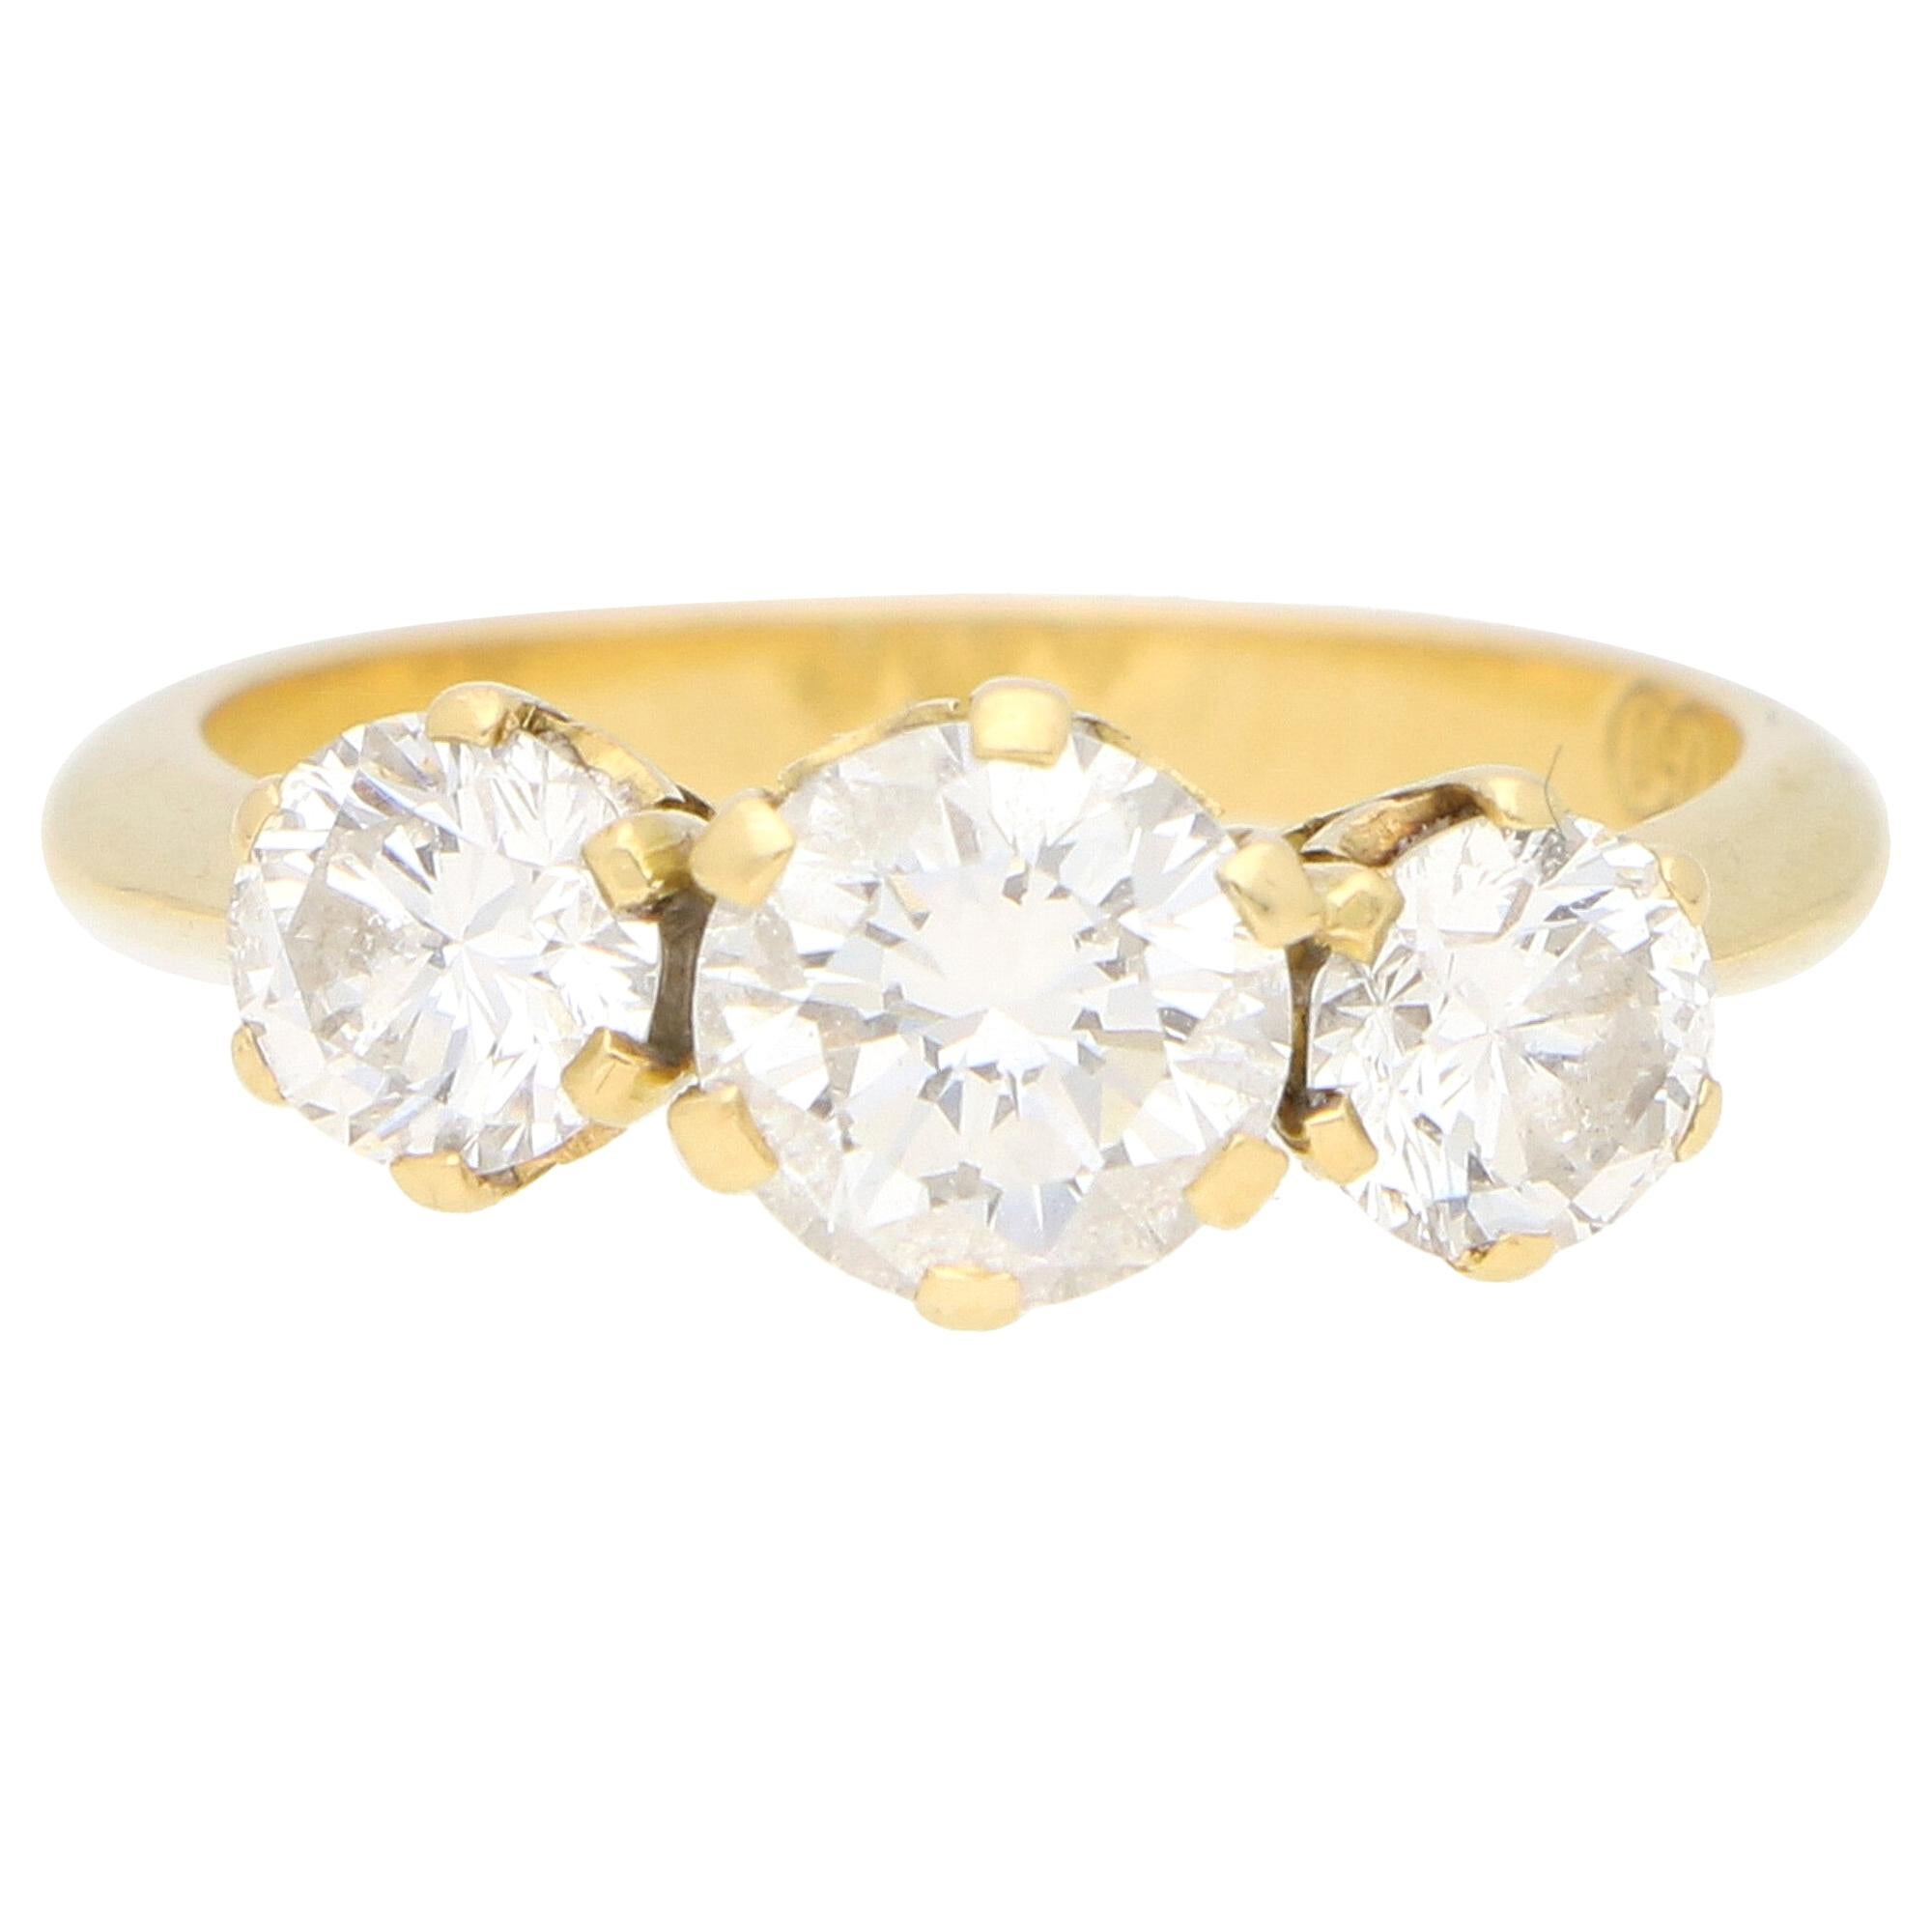 Vintage Round Cut Diamond Three Stone Engagement Ring Set in 18k Yellow Gold